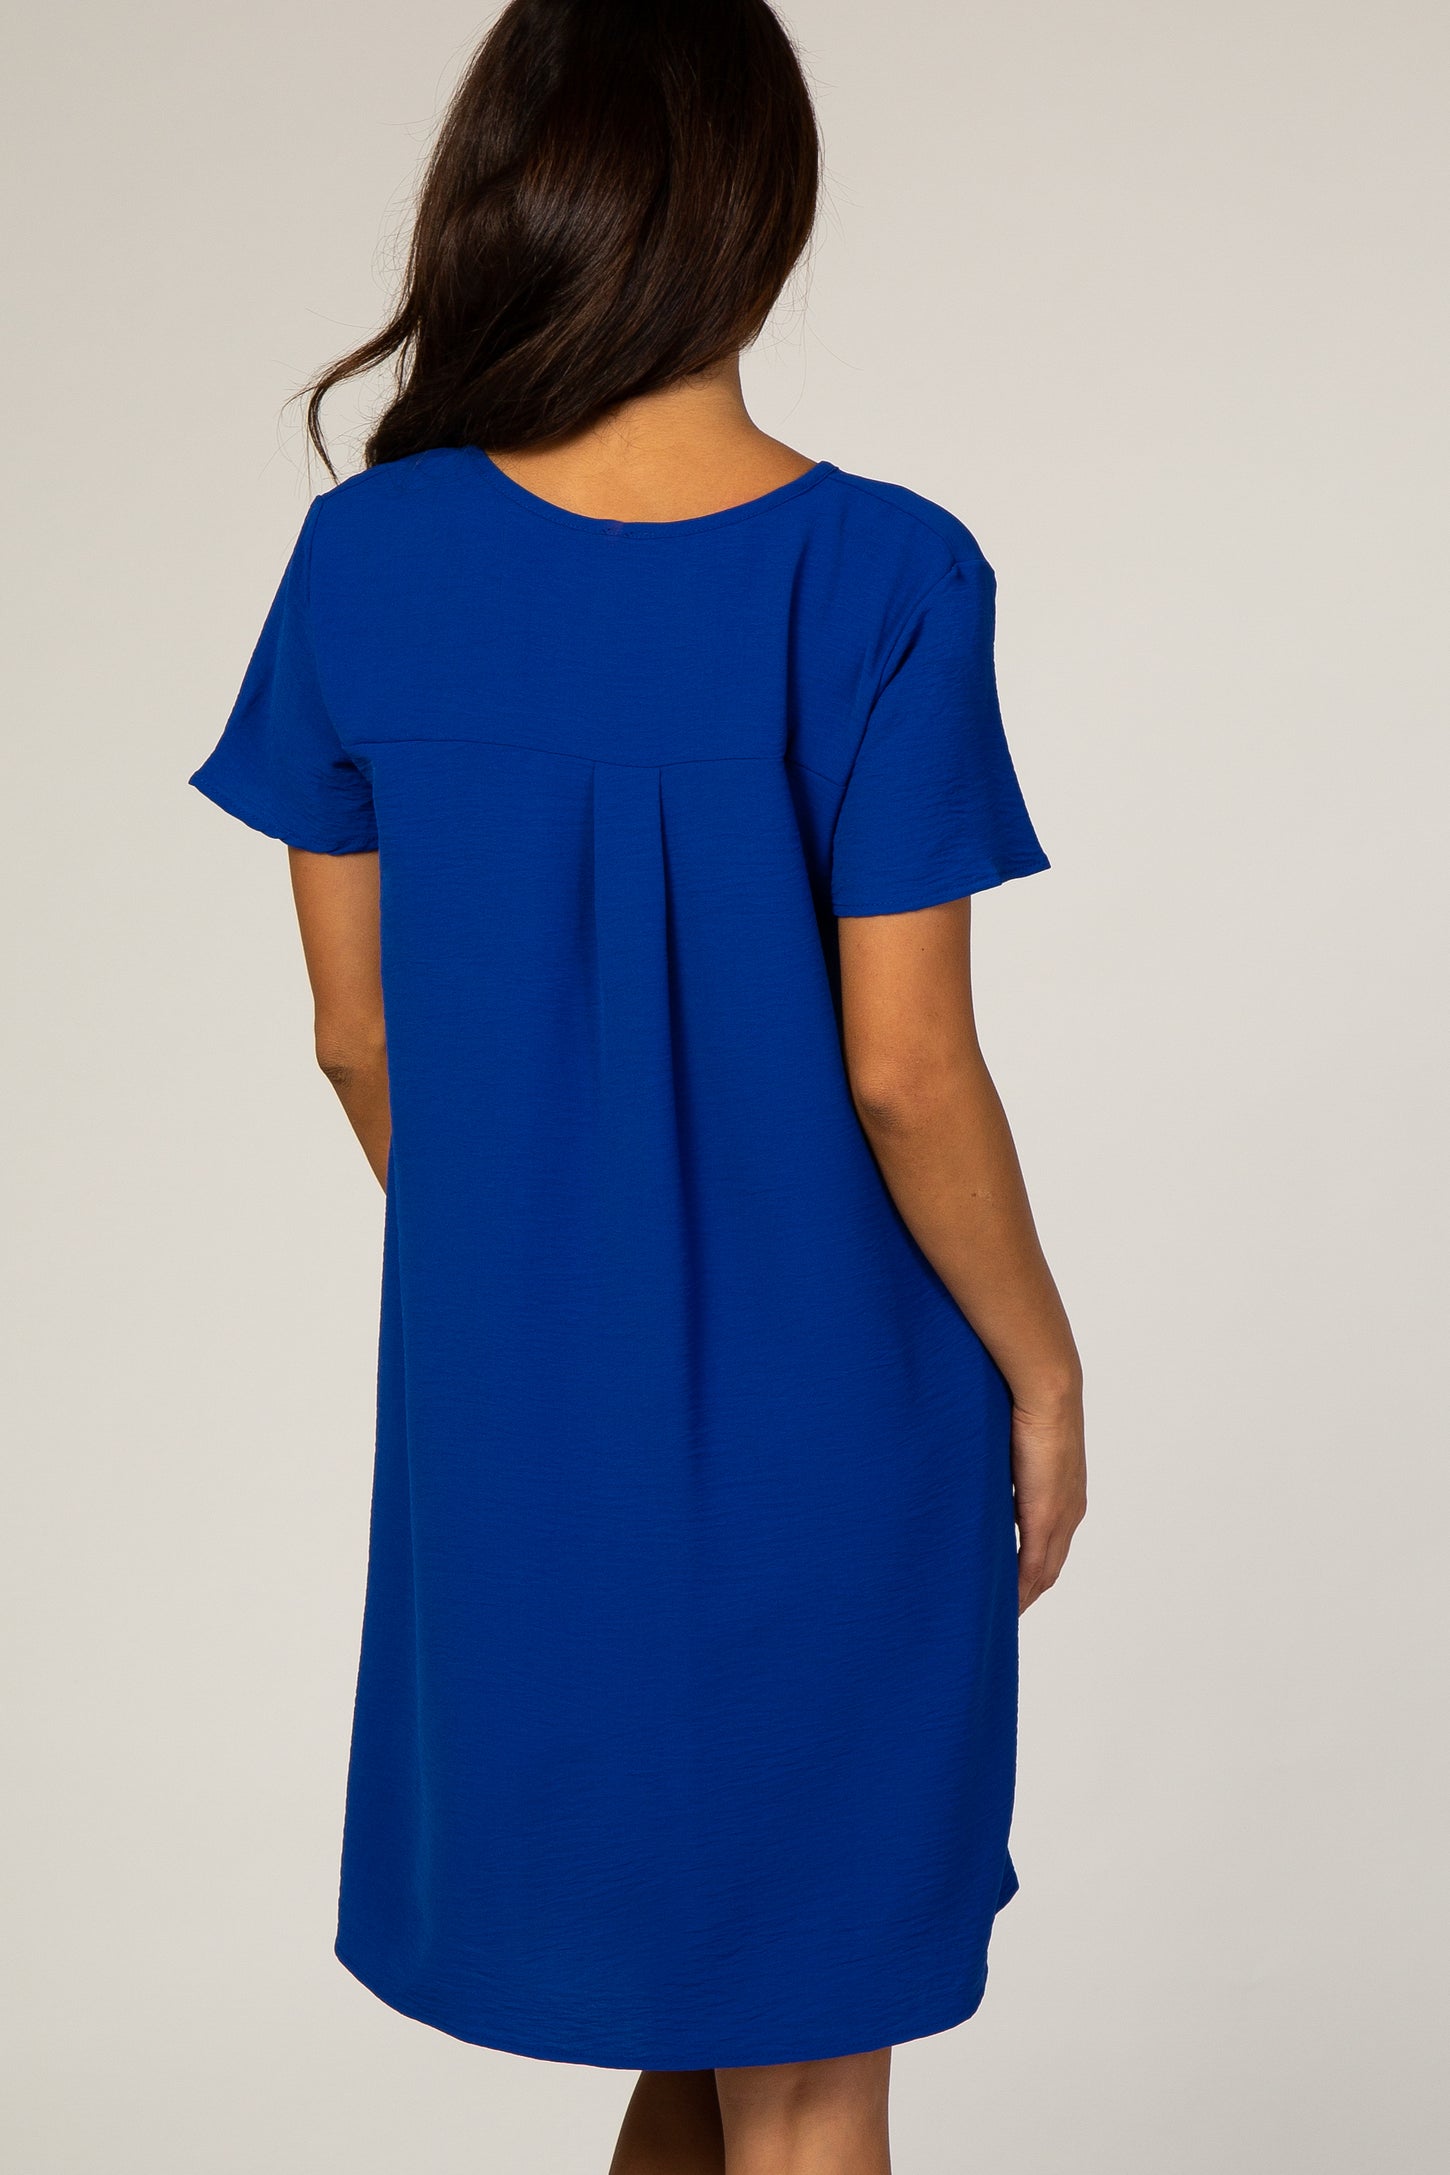 Royal Blue V-Neck Short Sleeve Dress